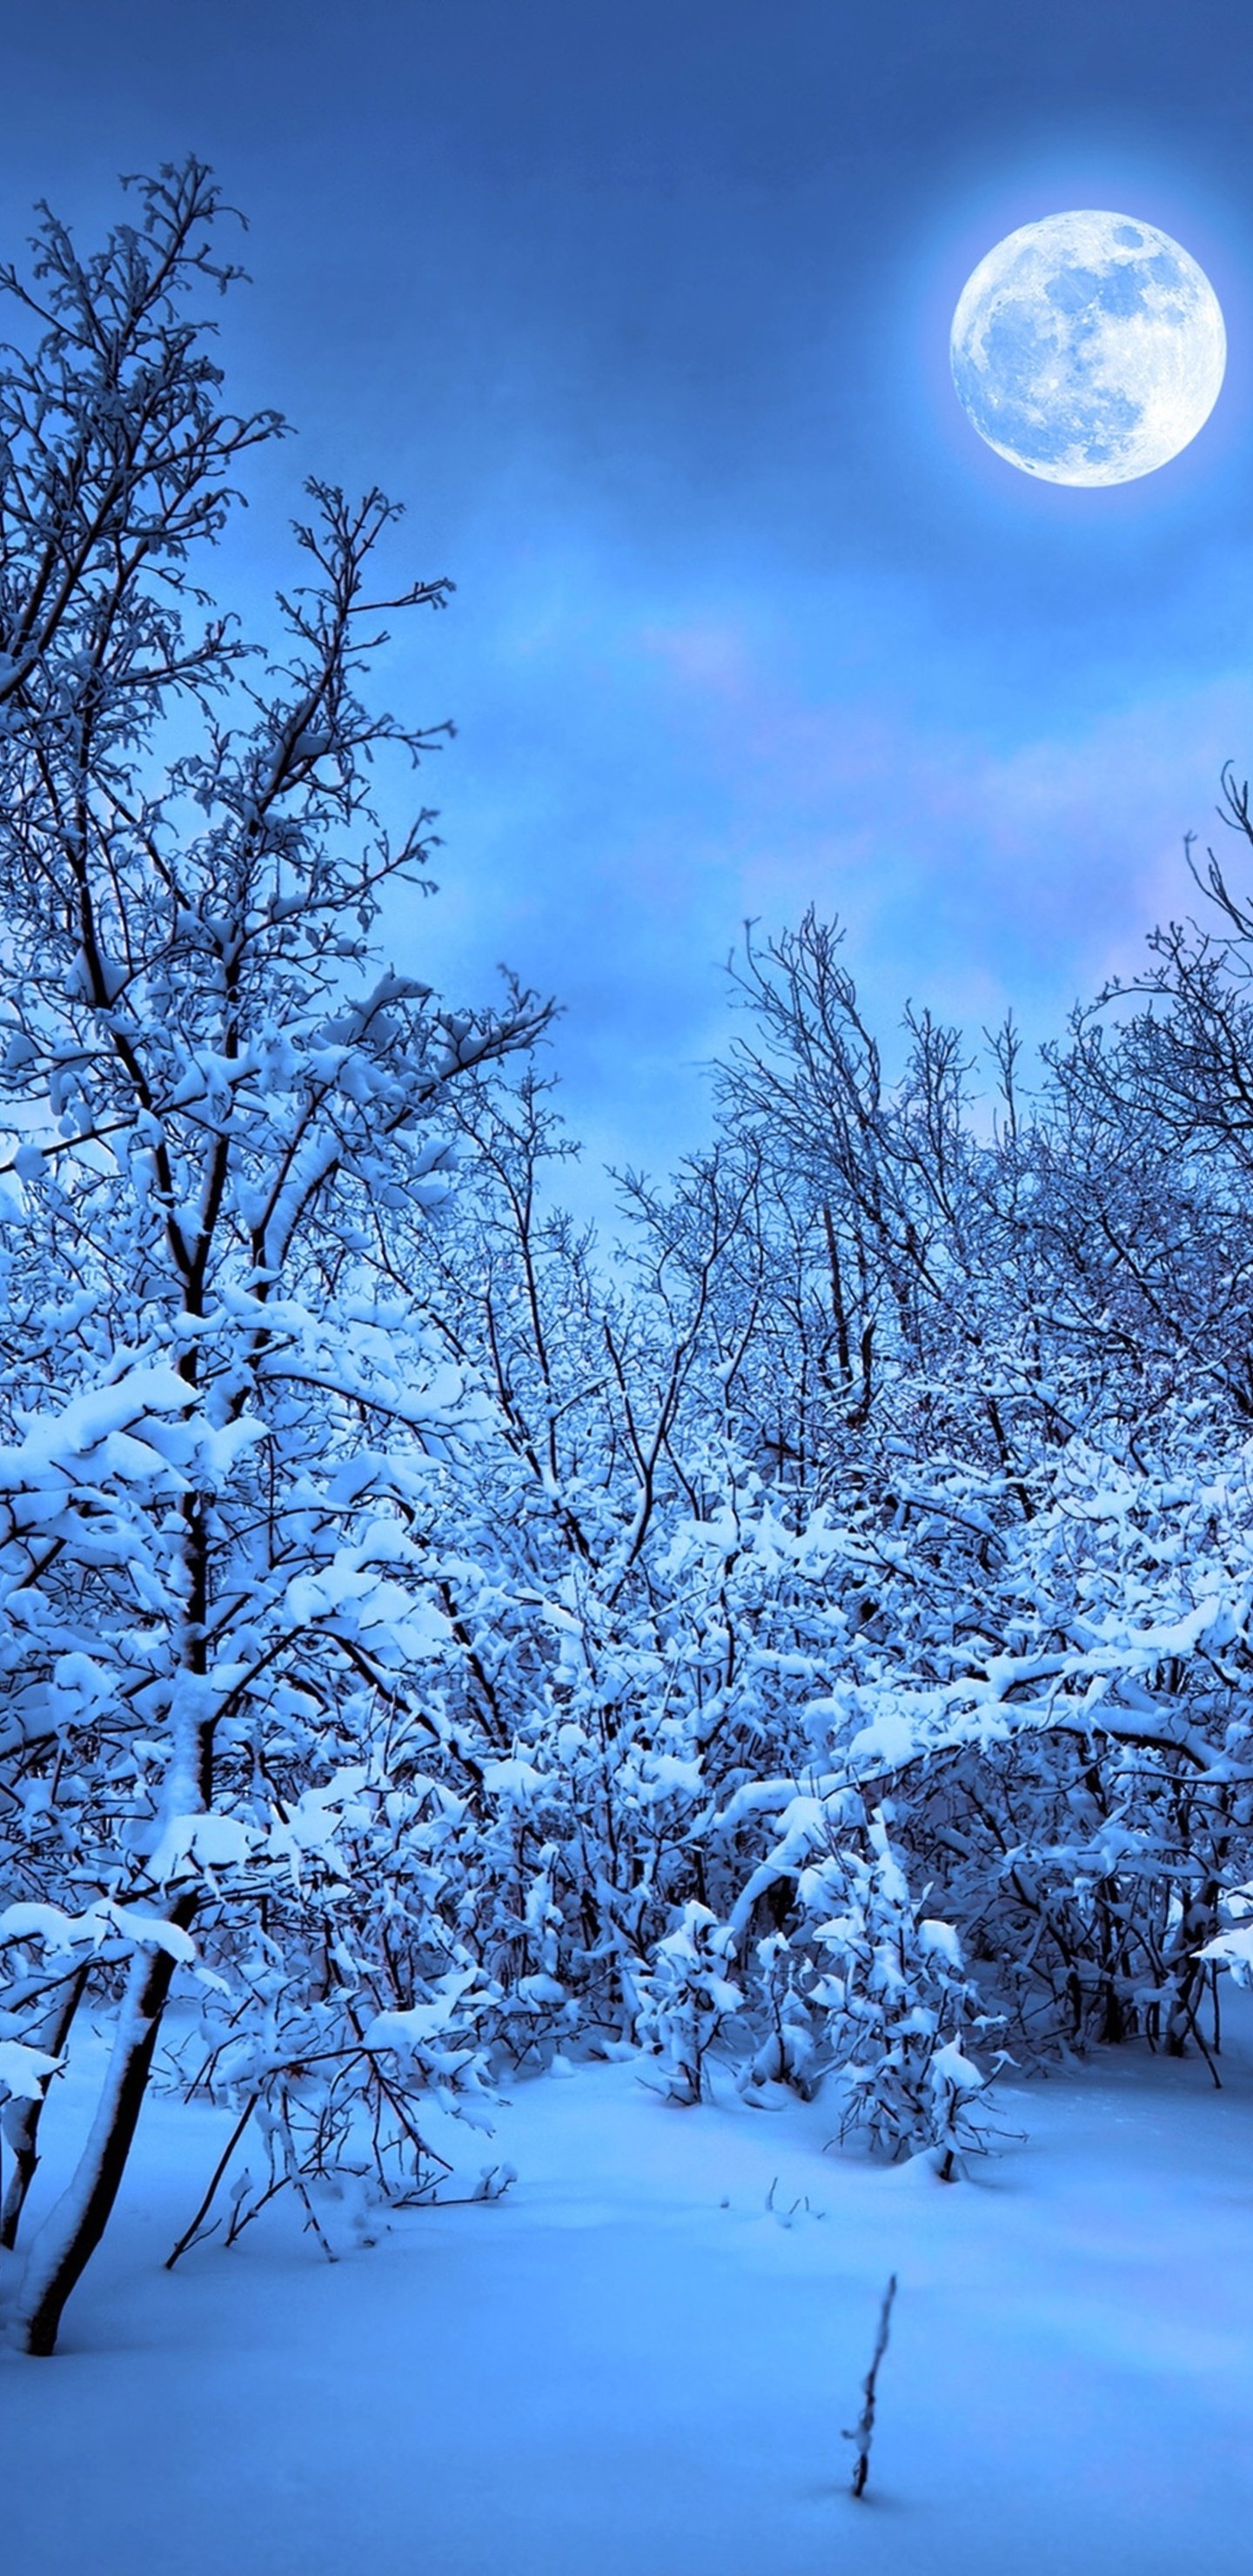 papel pintado de nieve,invierno,nieve,naturaleza,azul,árbol